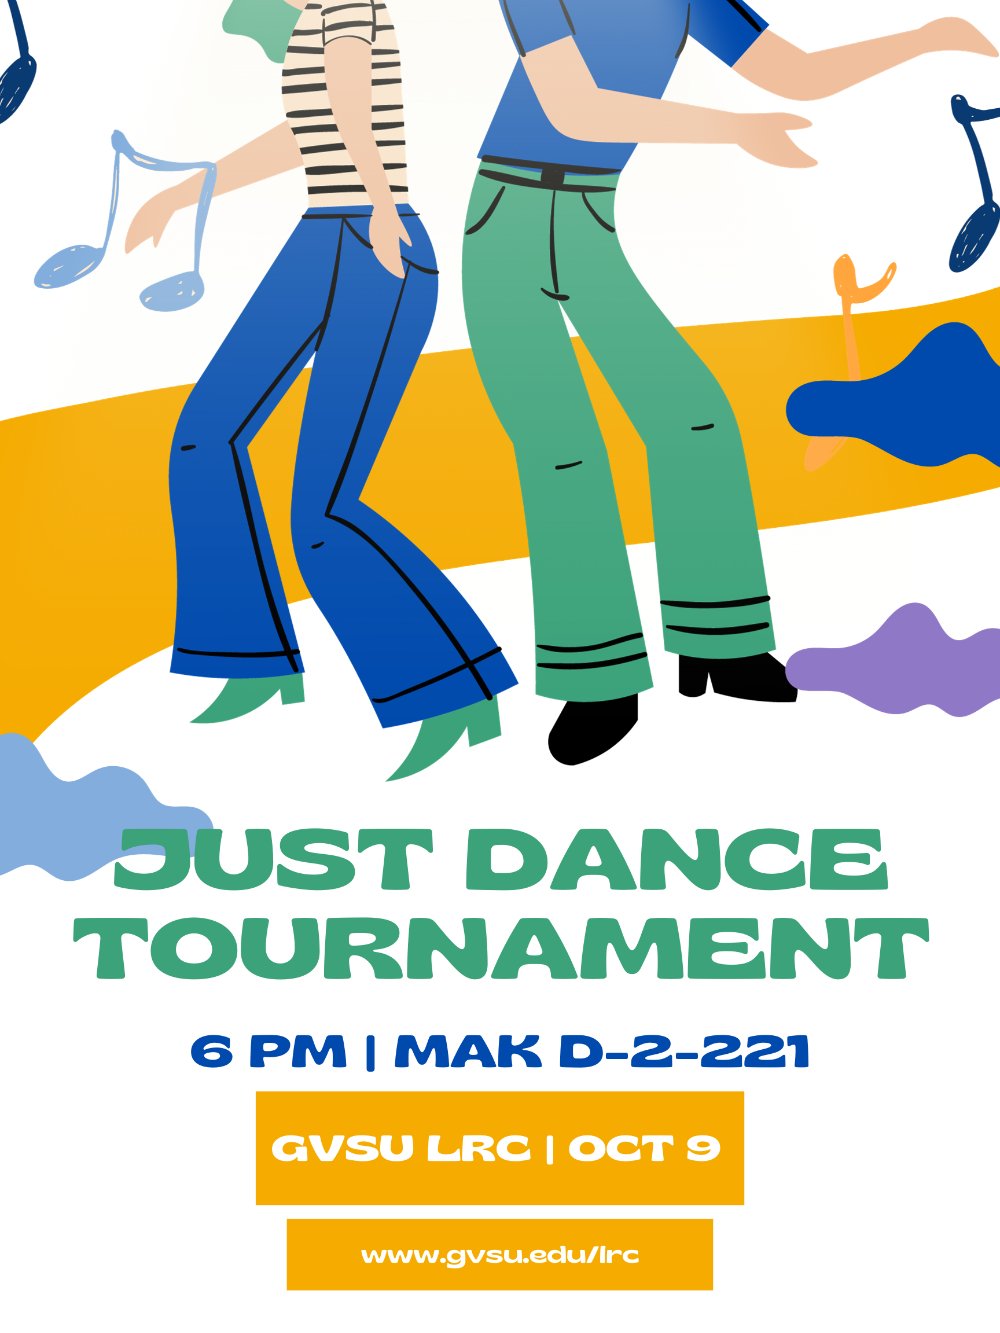 Just Dance 2 Tournament! October 9th, 6pm in MAK D-2-221